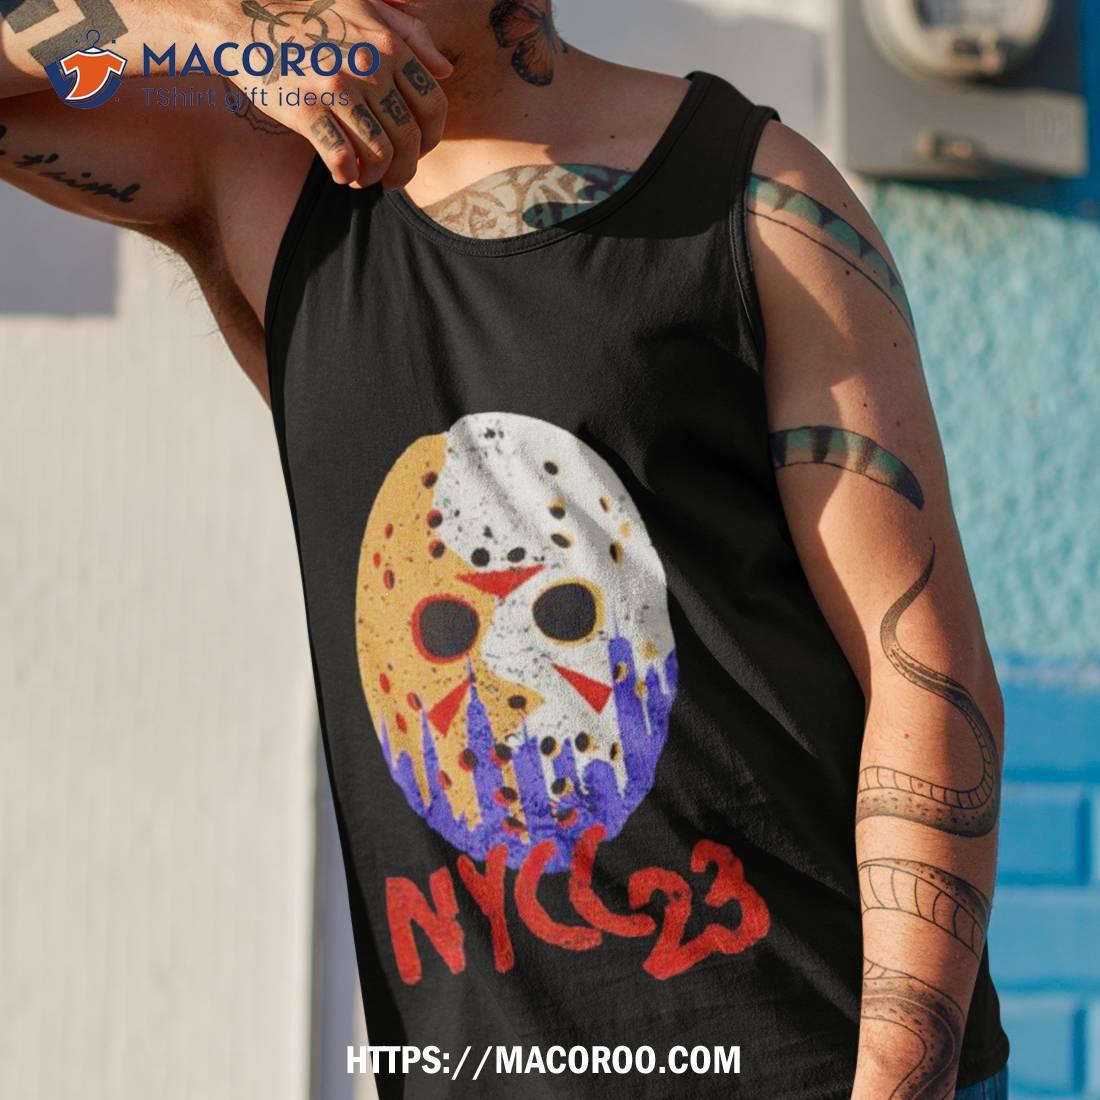 Jason Voorhees Nycc 2023 Shirt